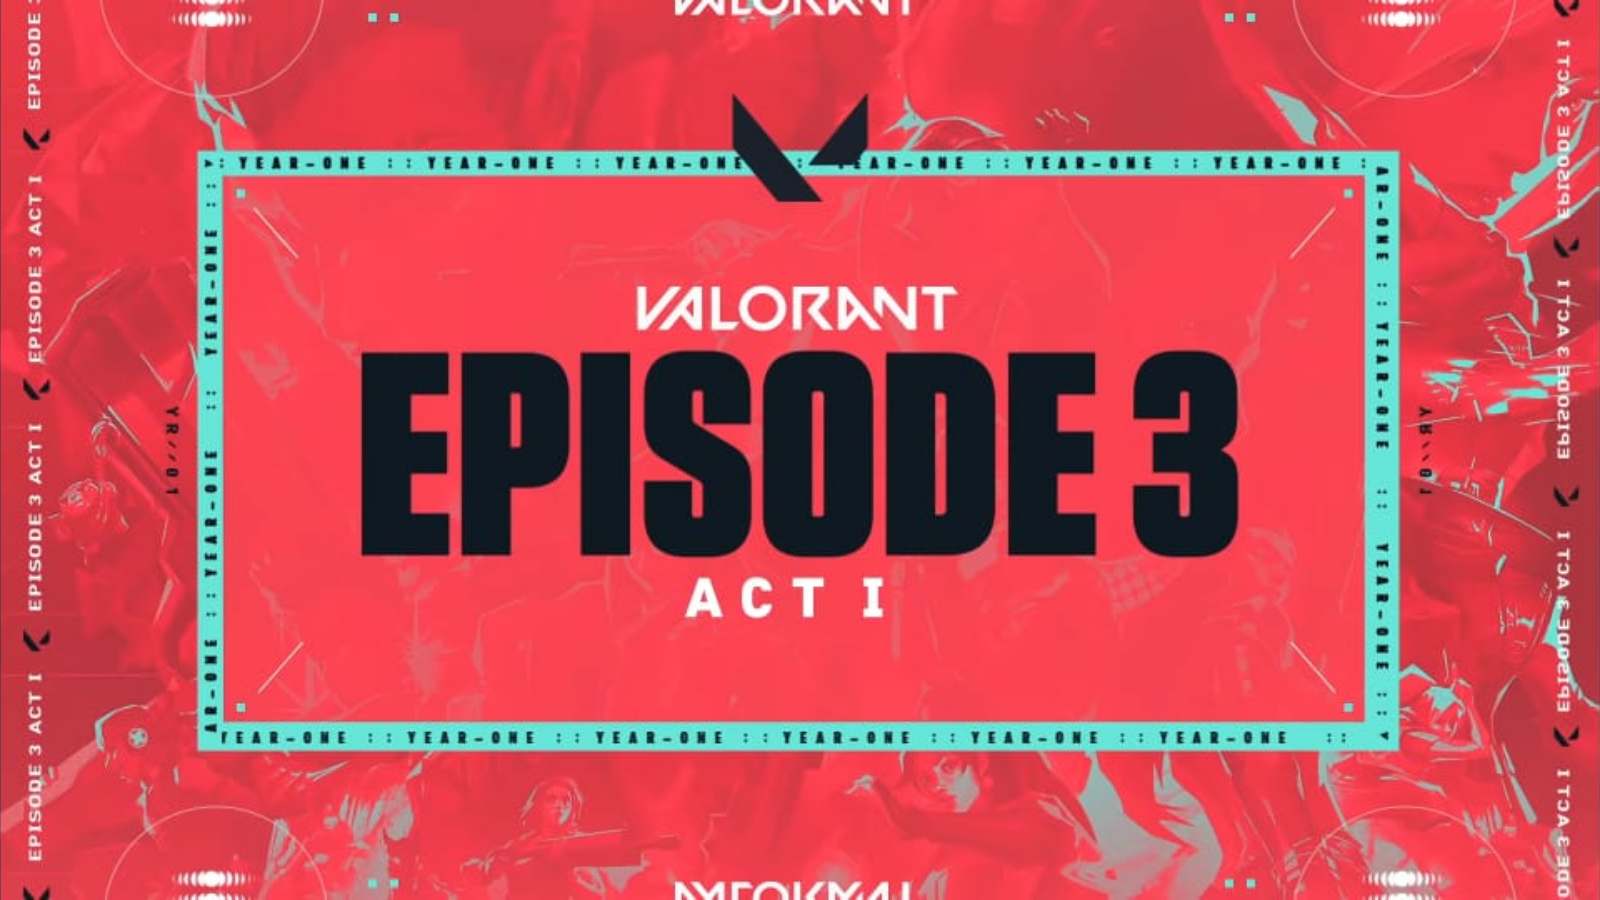 valorant episode act 1